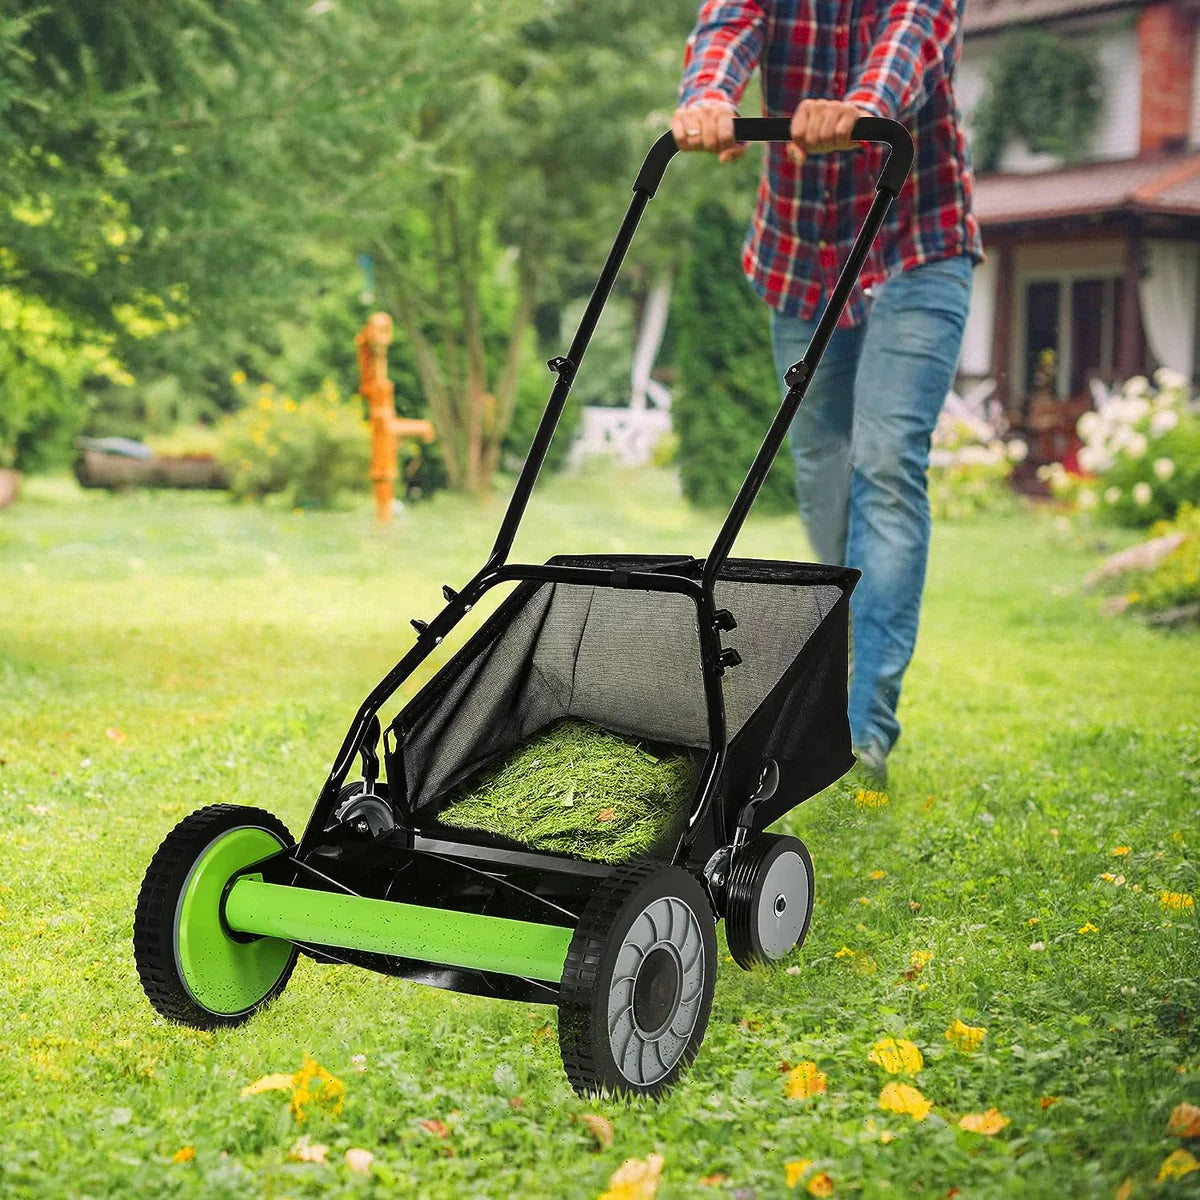 16" Push Cordless Lawn Mower 5-Blade Manual Walk-behind Mower with Detachable Grass Catcher, 4 Wheels